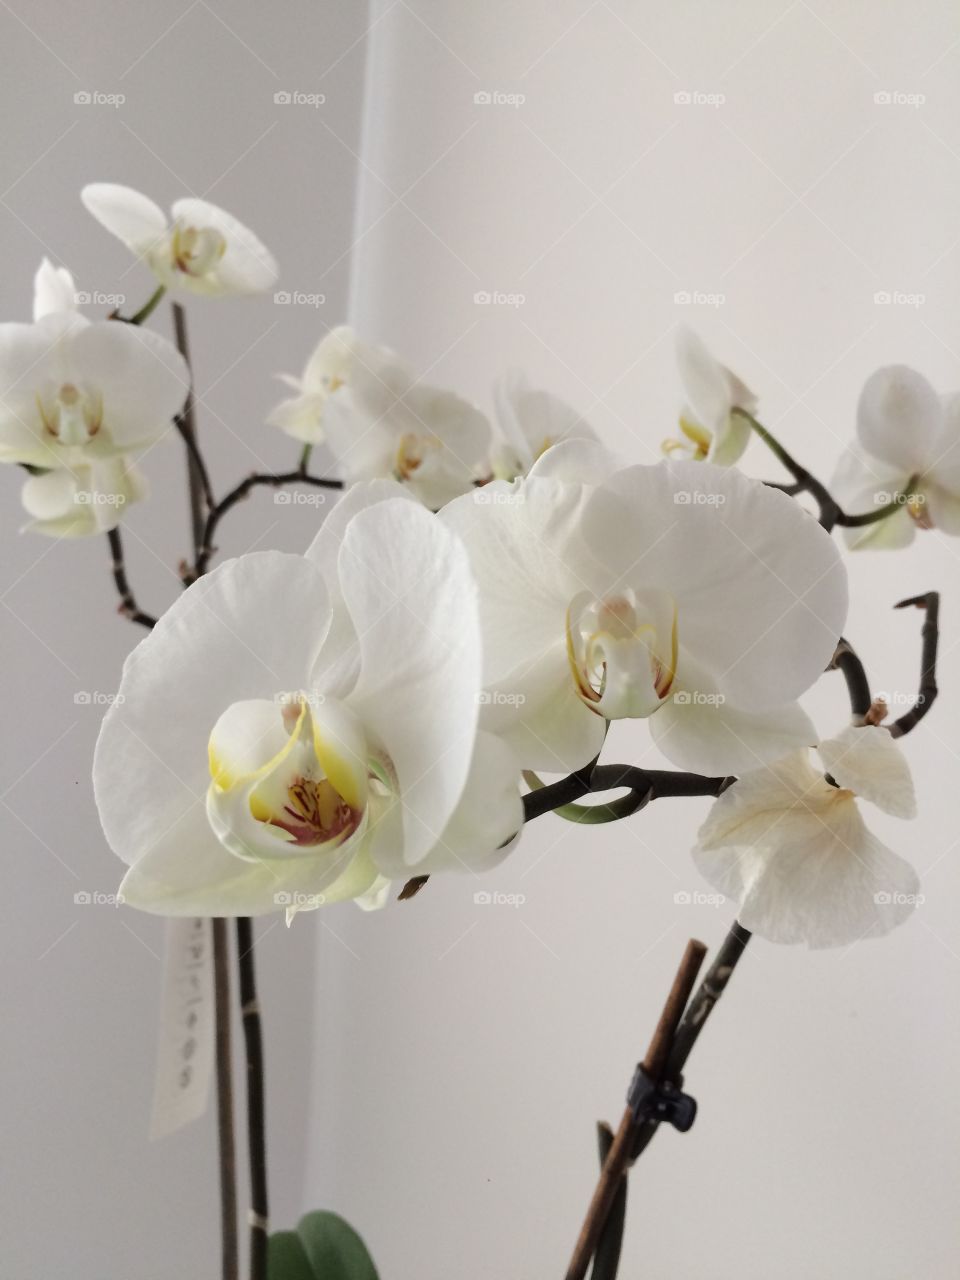 #flower#orkidea